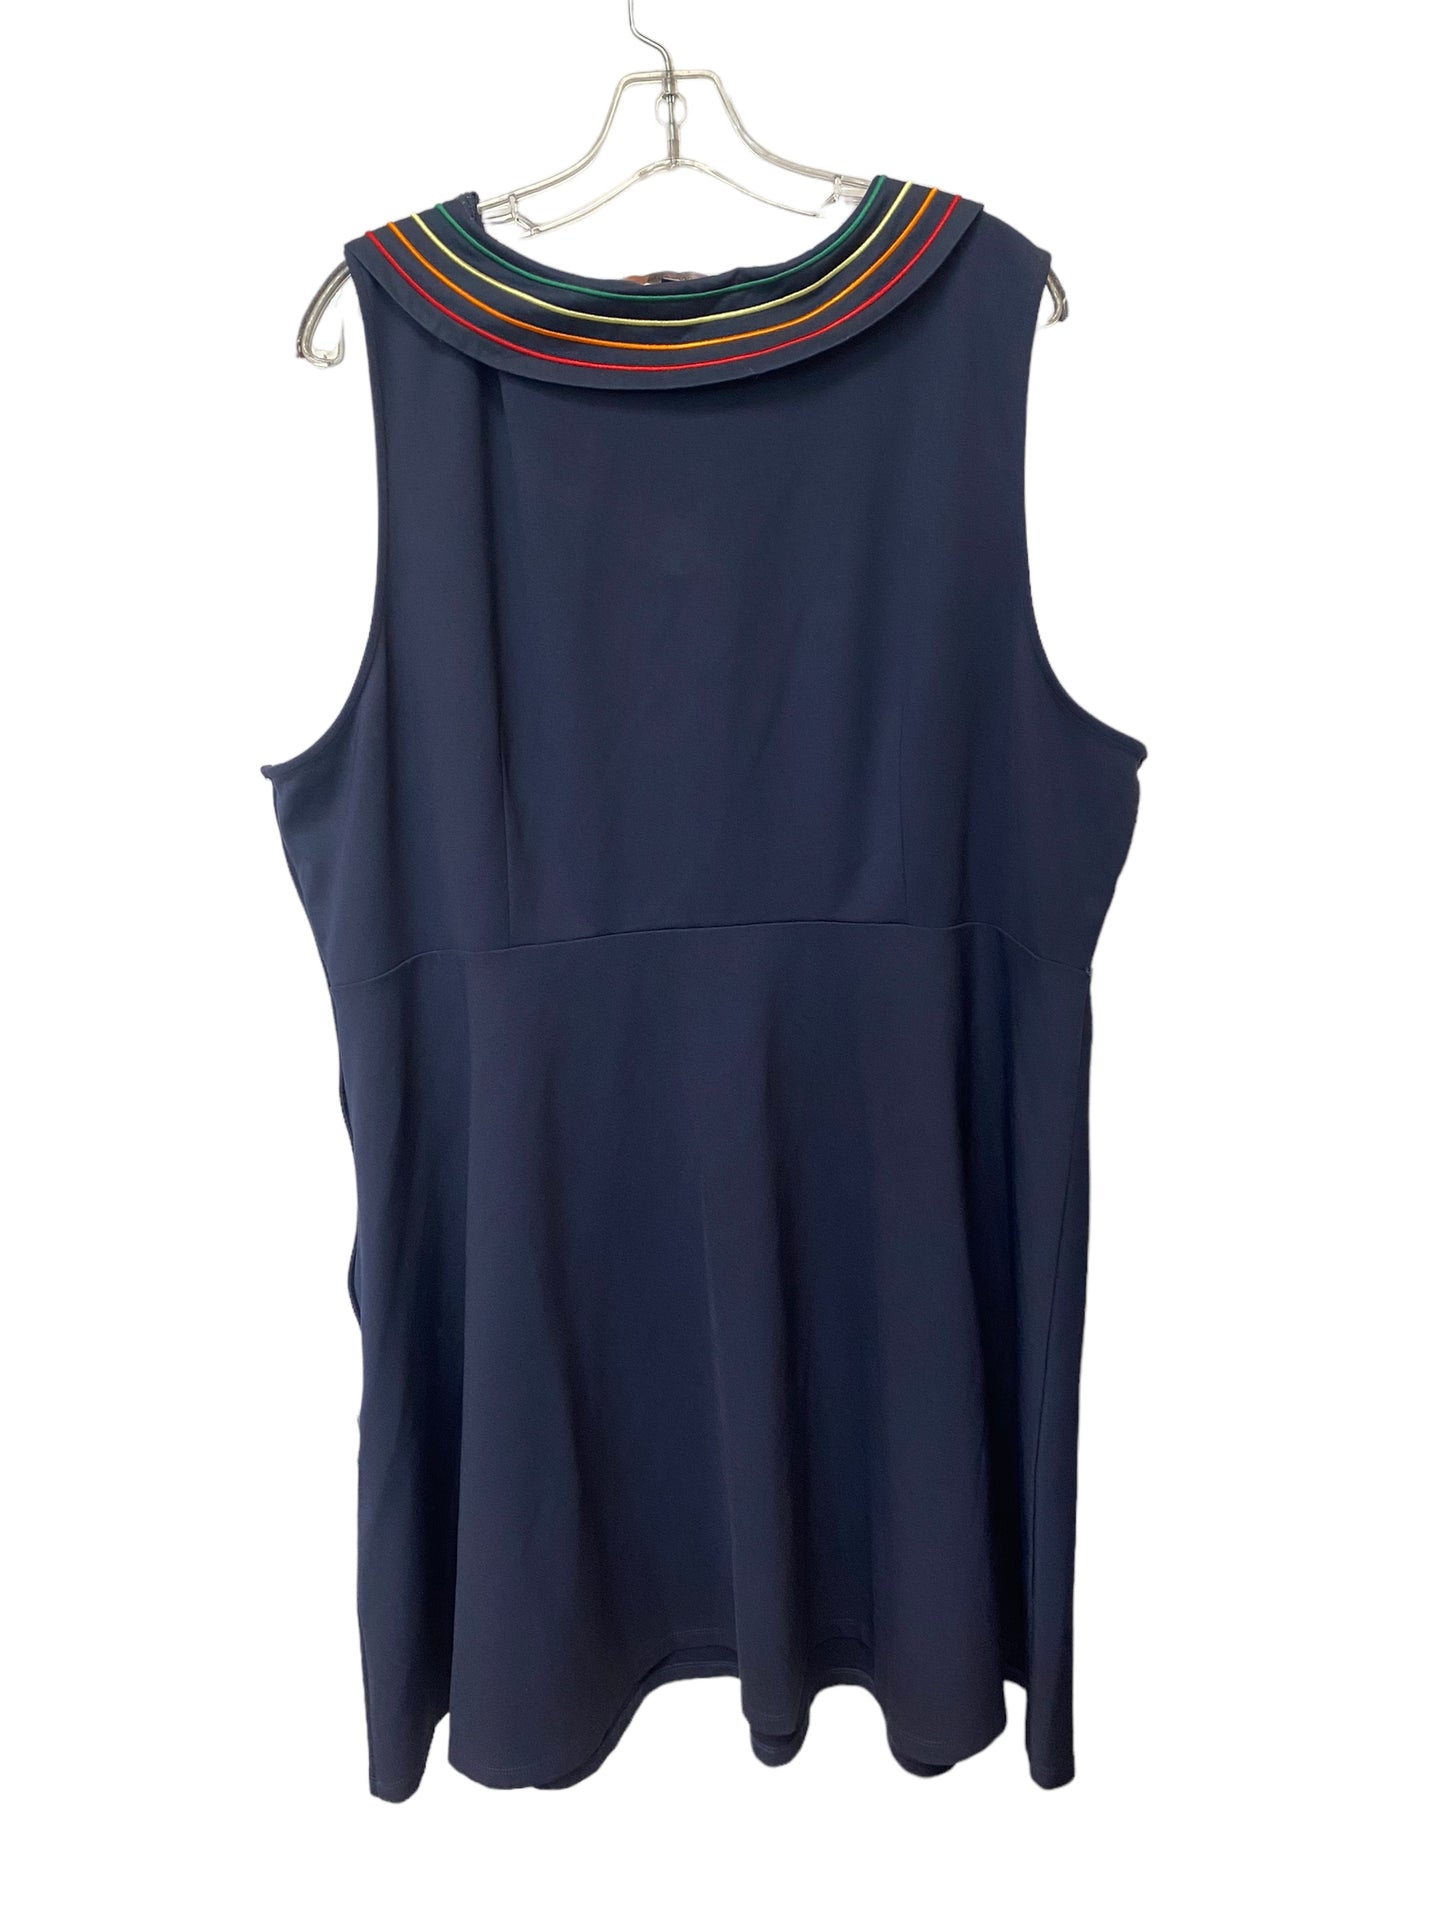 Dress Casual Midi By Modcloth  Size: 3x